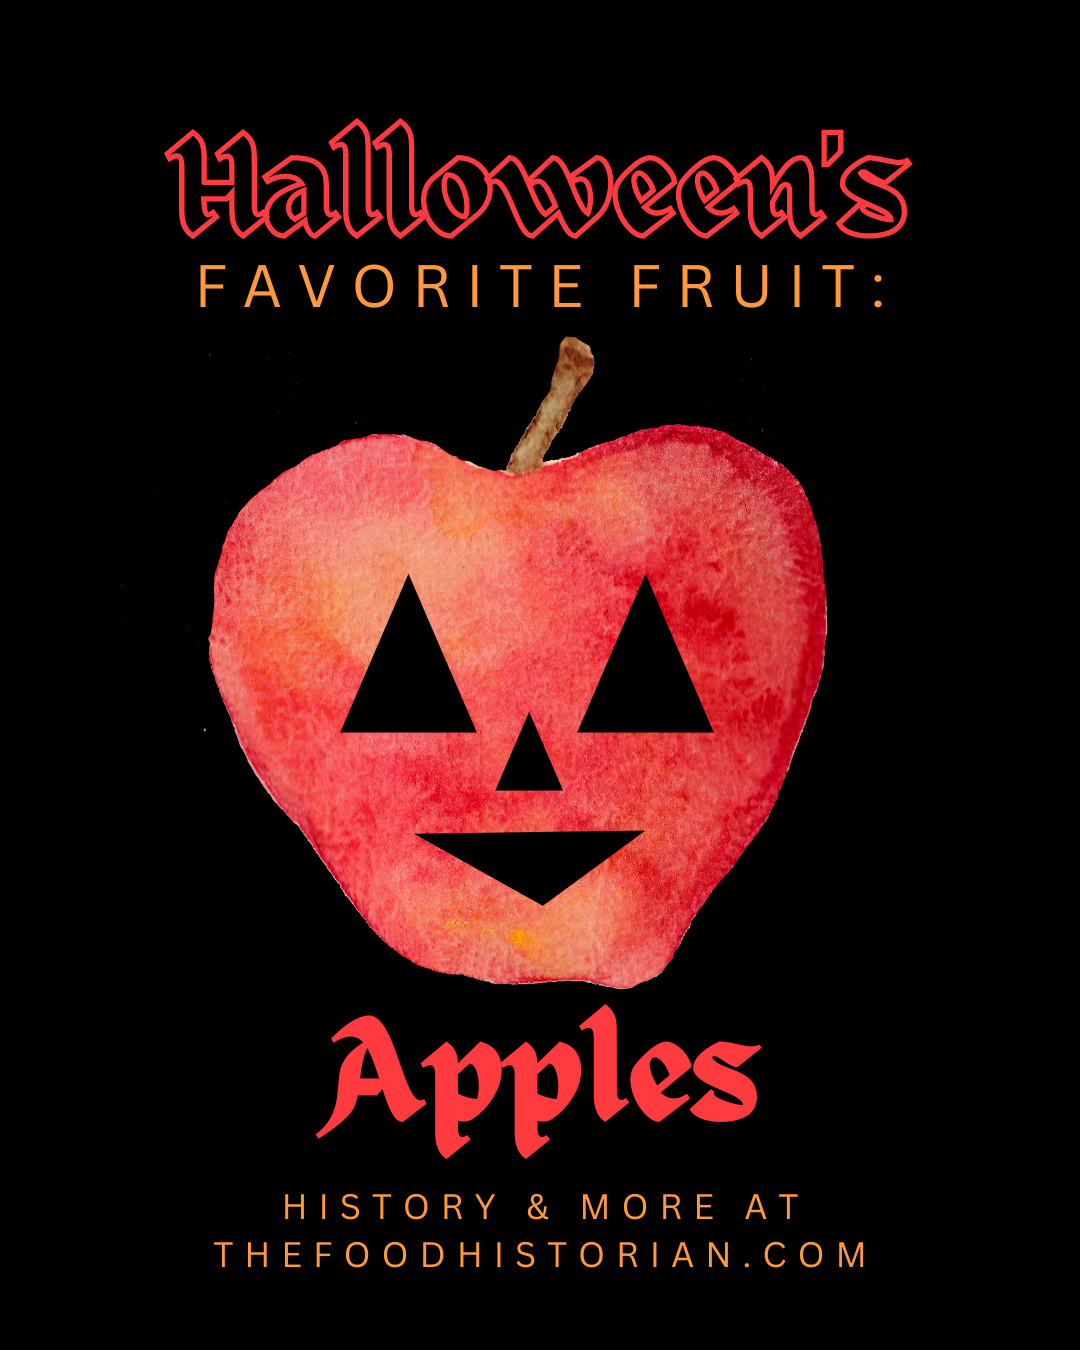 http://www.thefoodhistorian.com/uploads/2/5/8/6/25860210/halloween-s-favorite-fruit-apples_orig.png